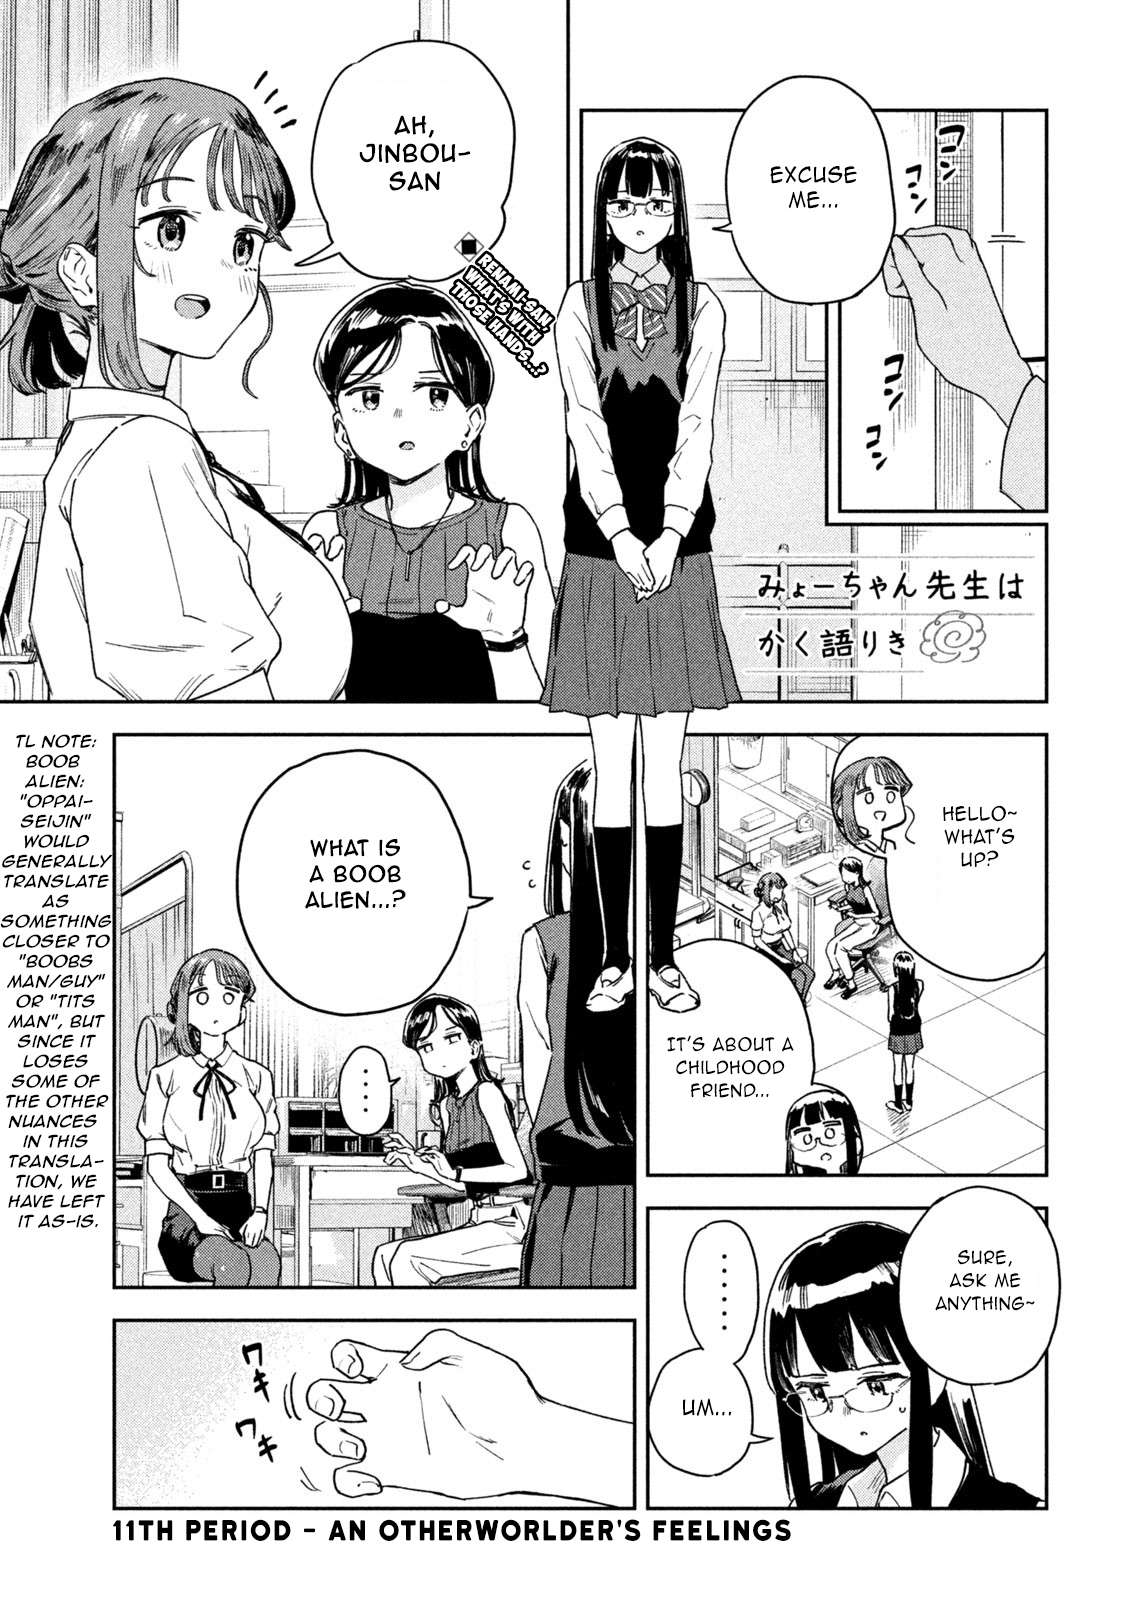 Miyo-Chan Sensei Said So - chapter 11 - #1